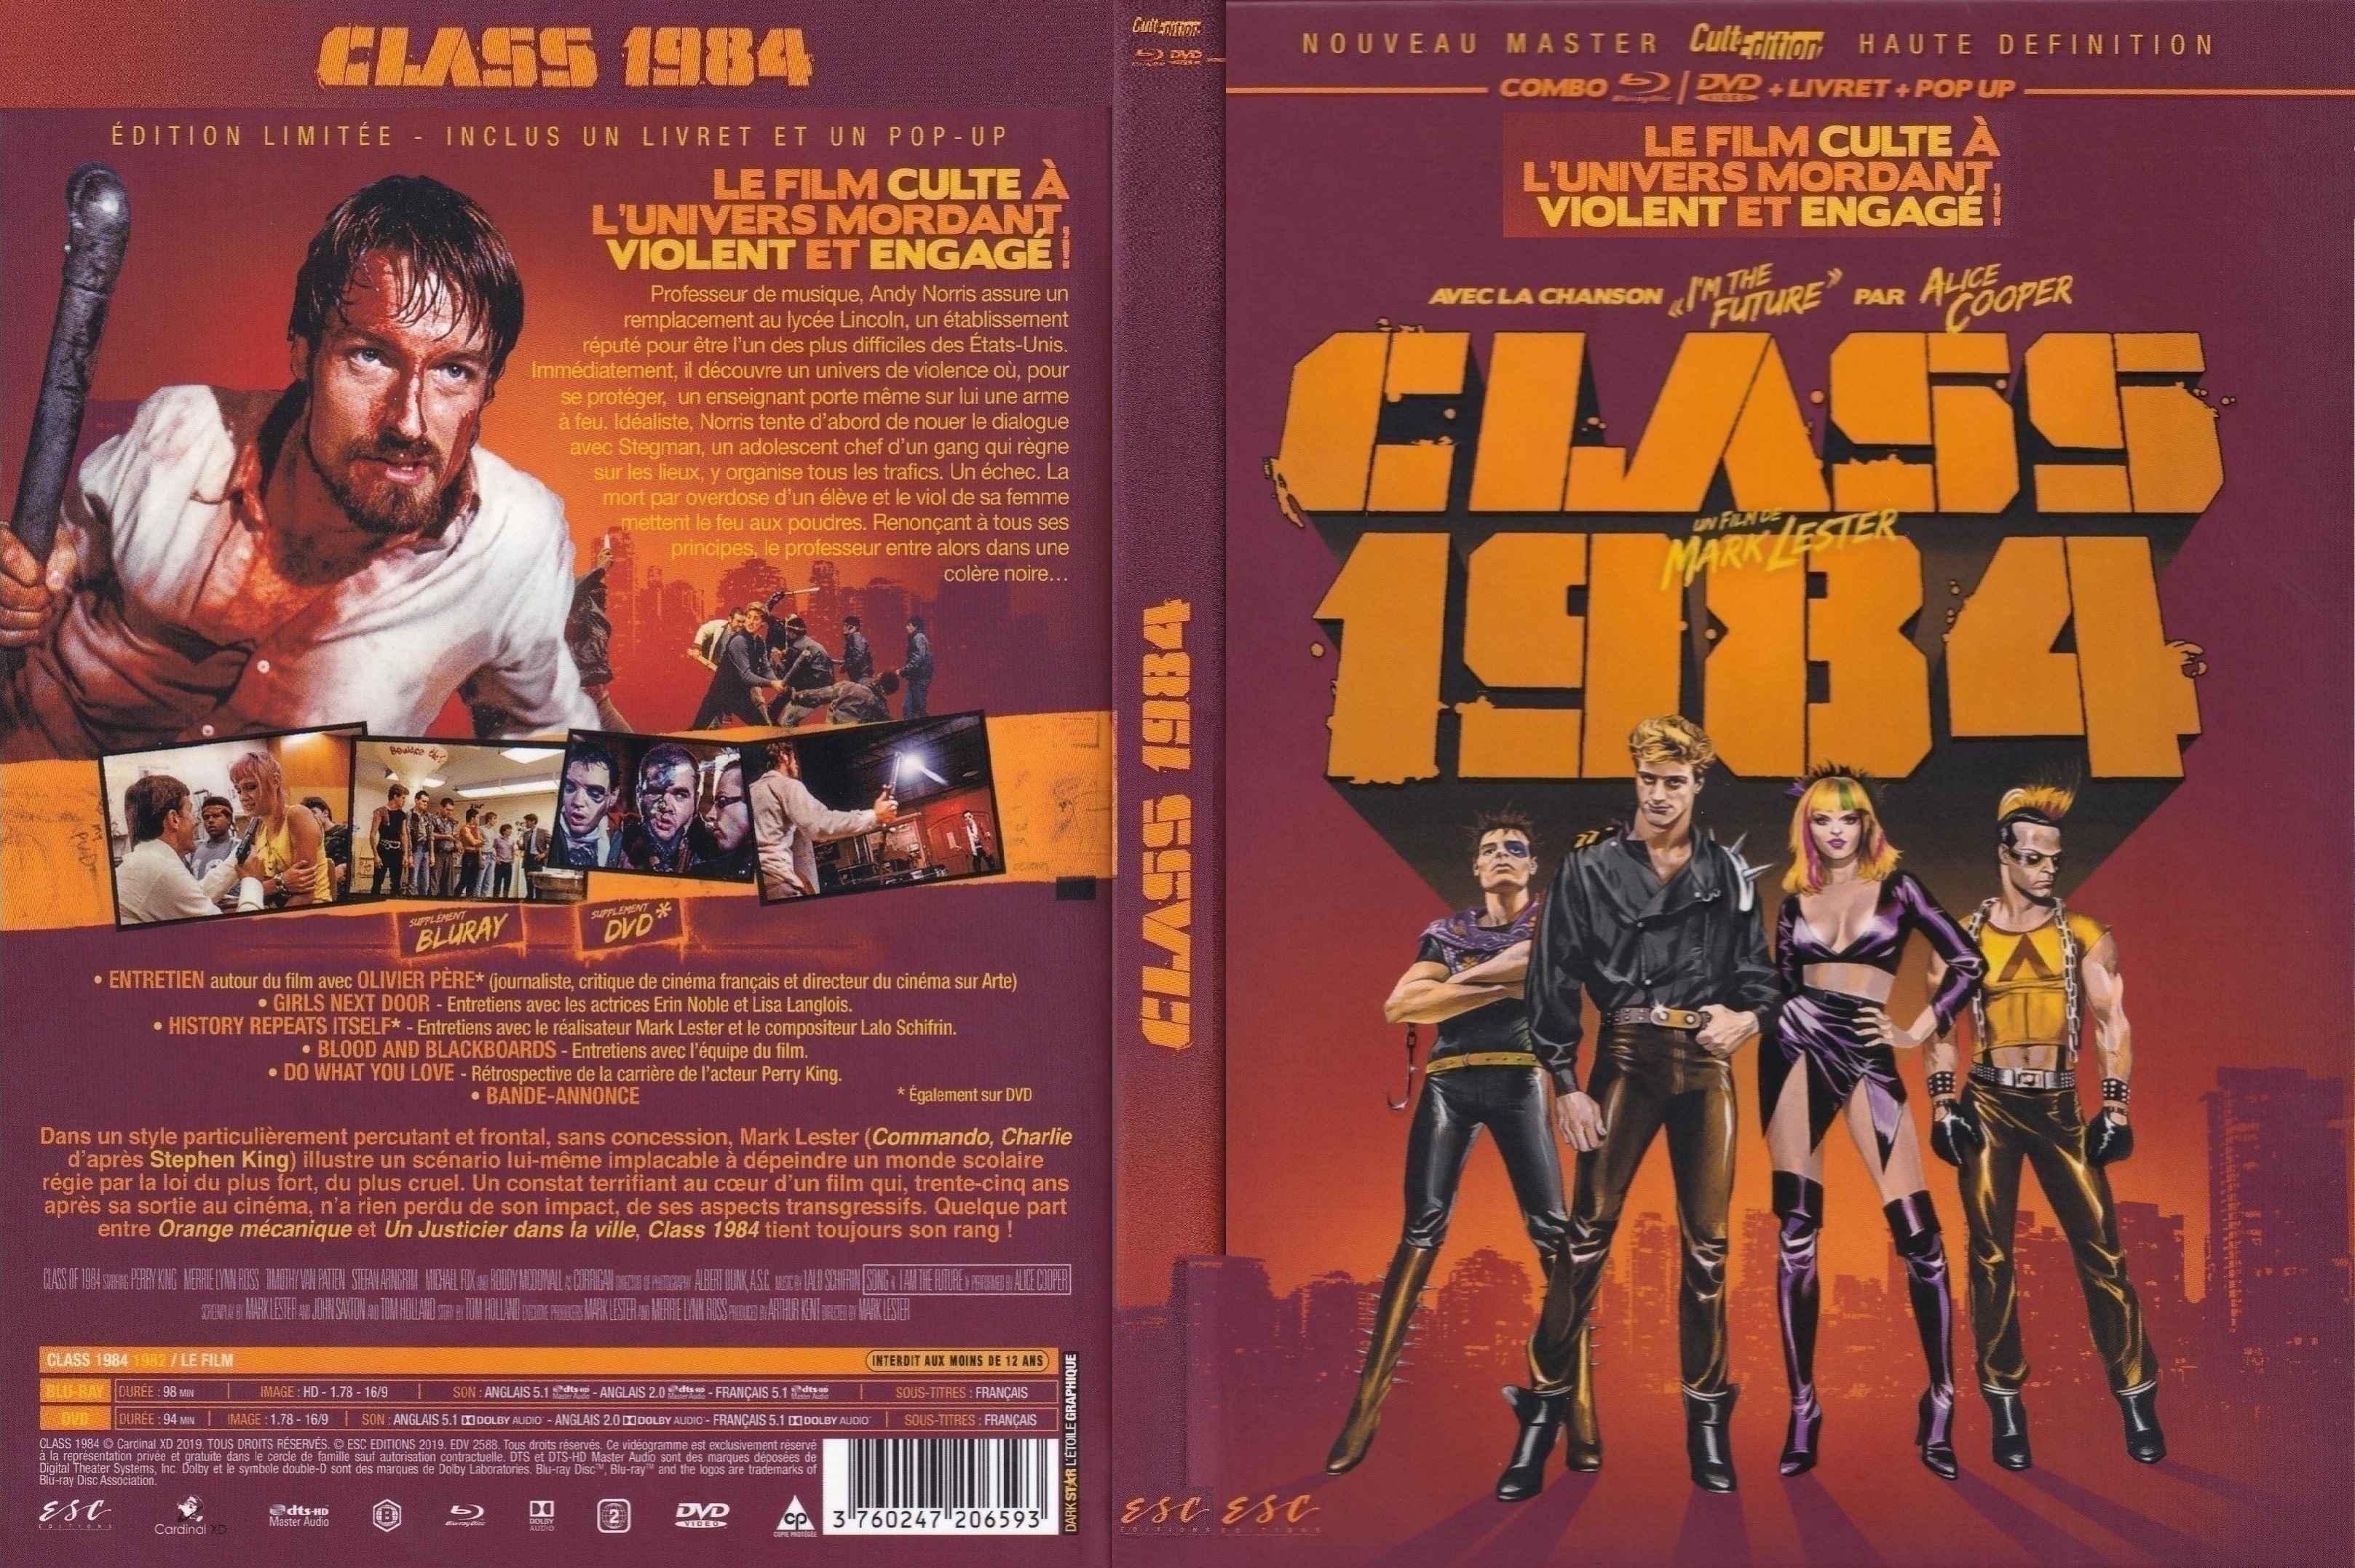 Jaquette DVD Class 1984 (BLU-RAY)